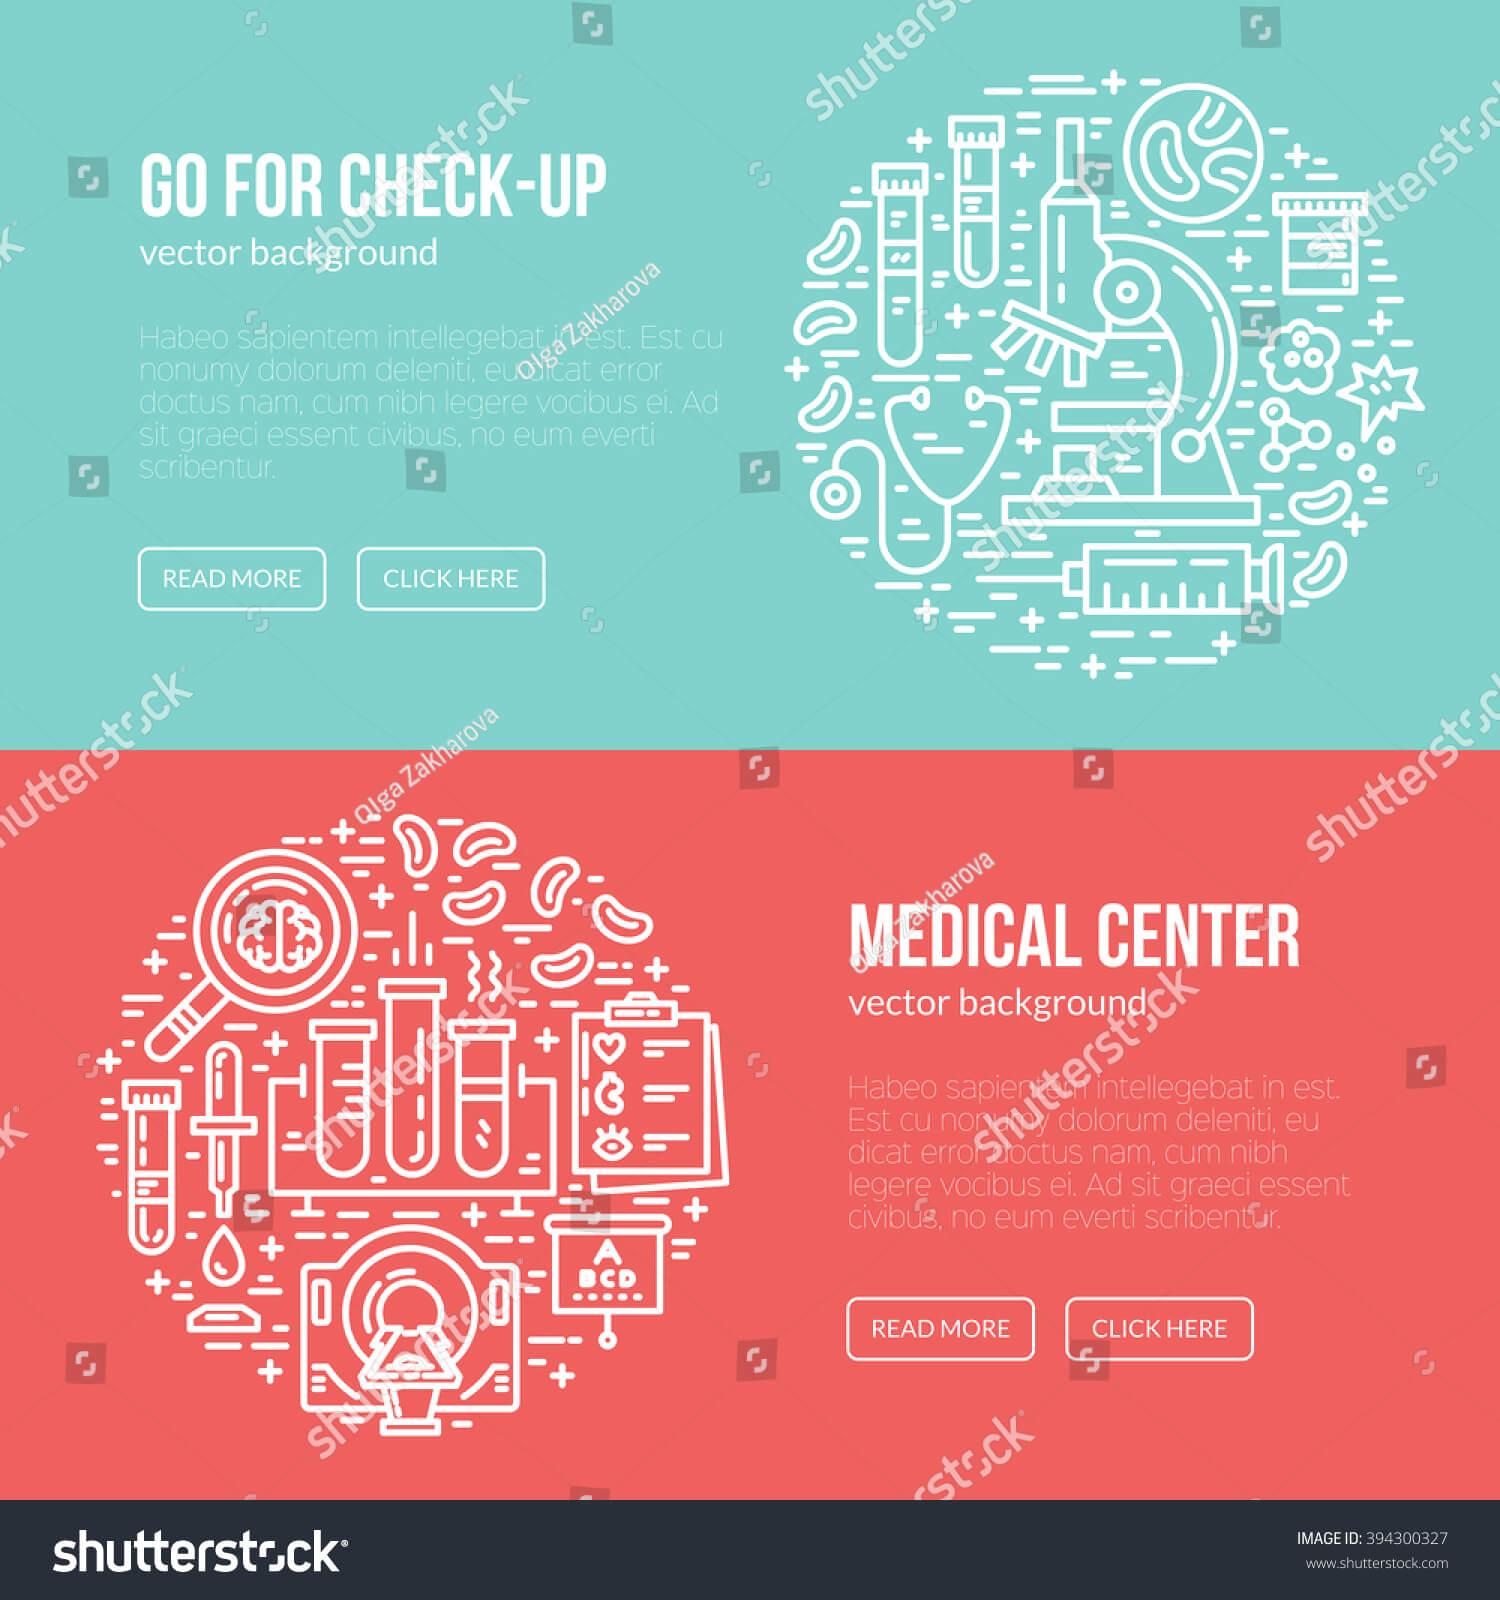 Medical Banner Design Template Different Research Stock For Medical Banner Template